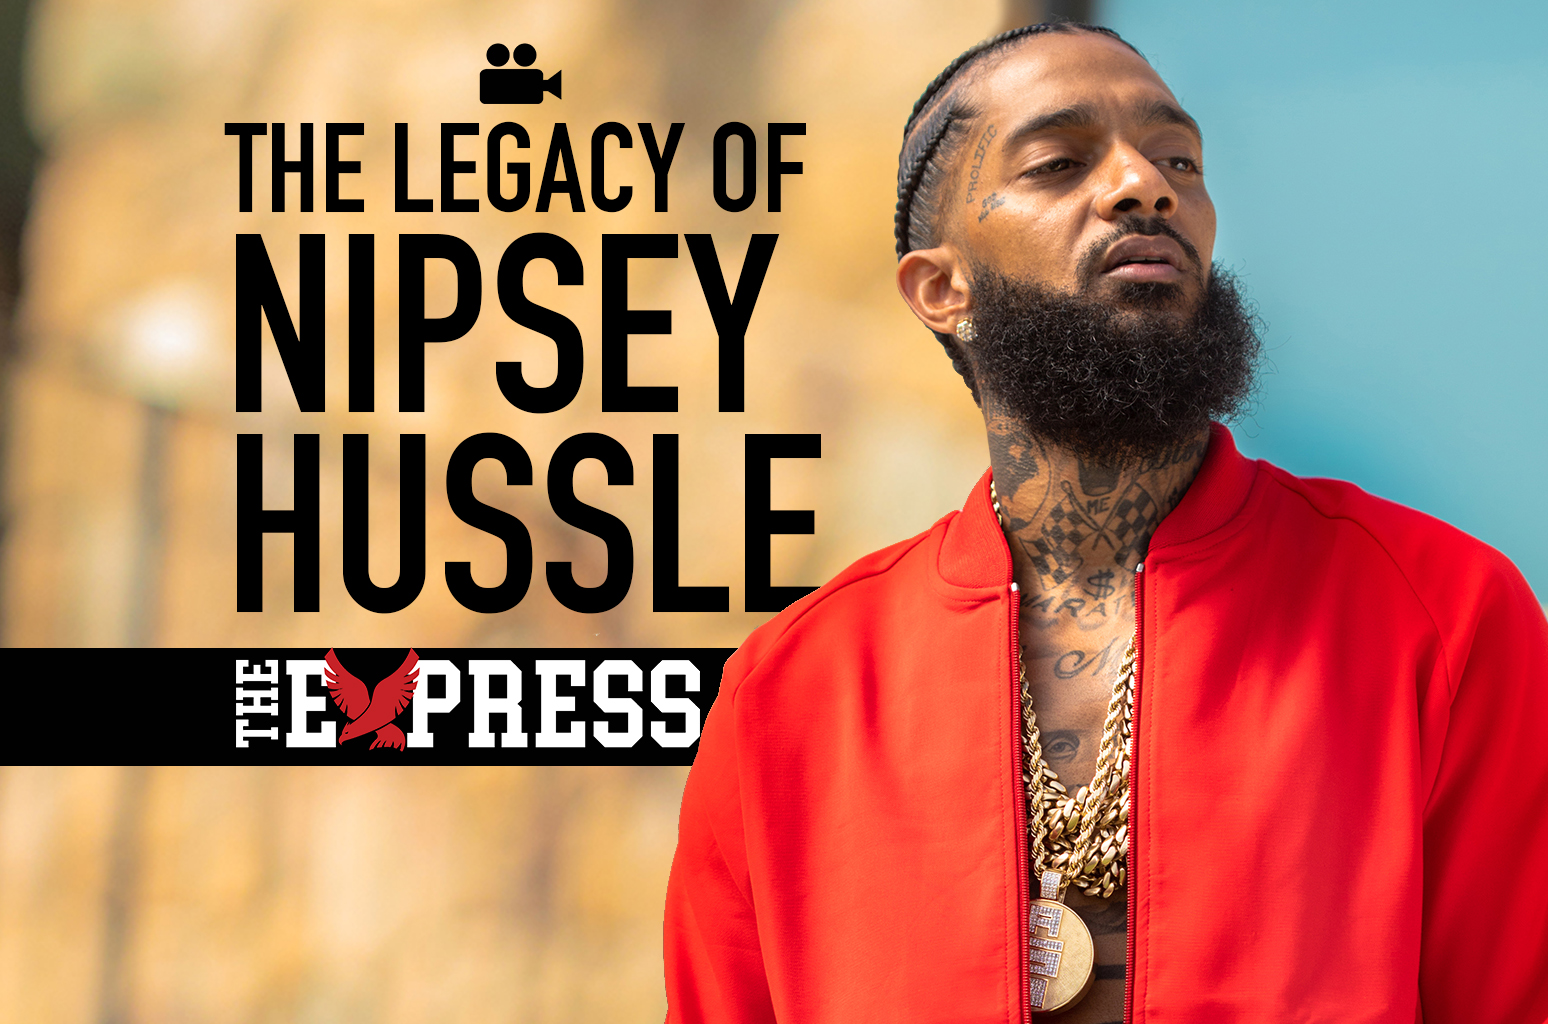 The Legacy of Nipsey Hussle